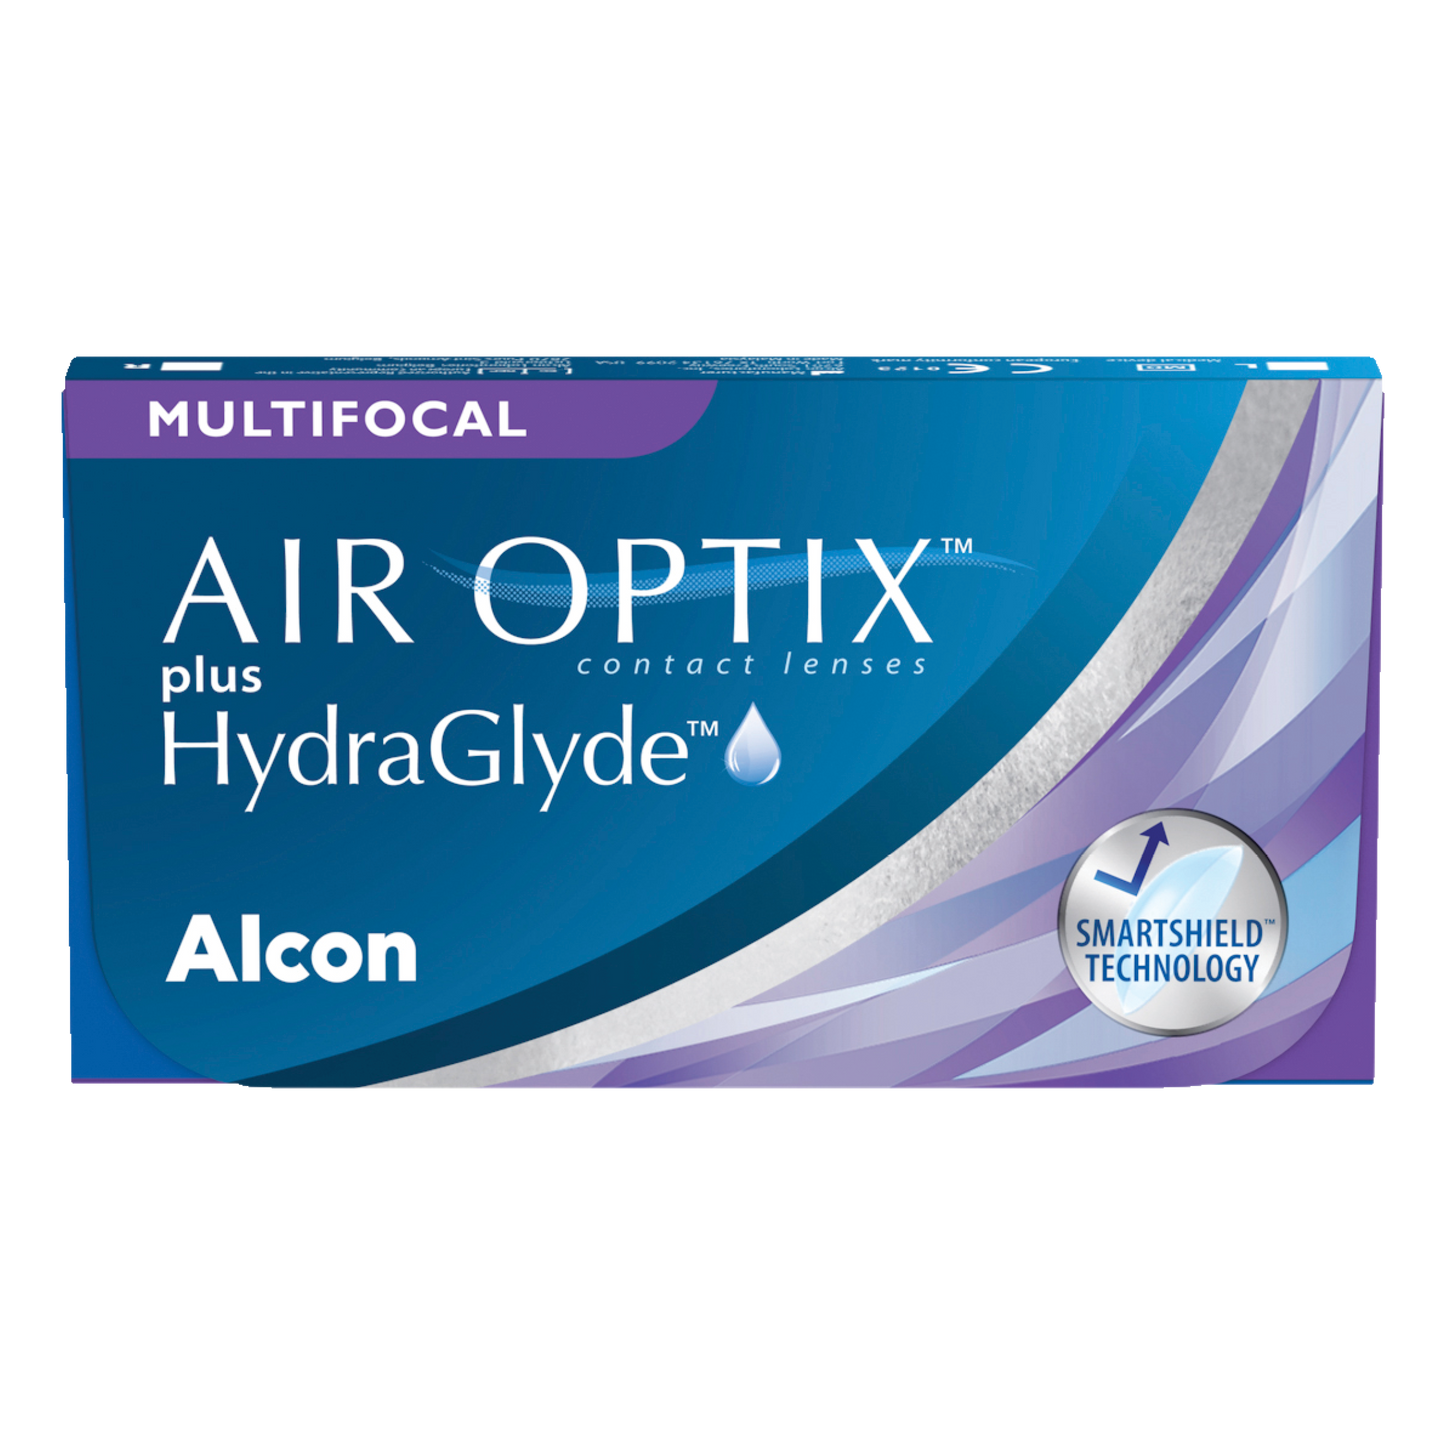 Box of Alcon Air Optix plus Hydraglyde multifocal contact lenses